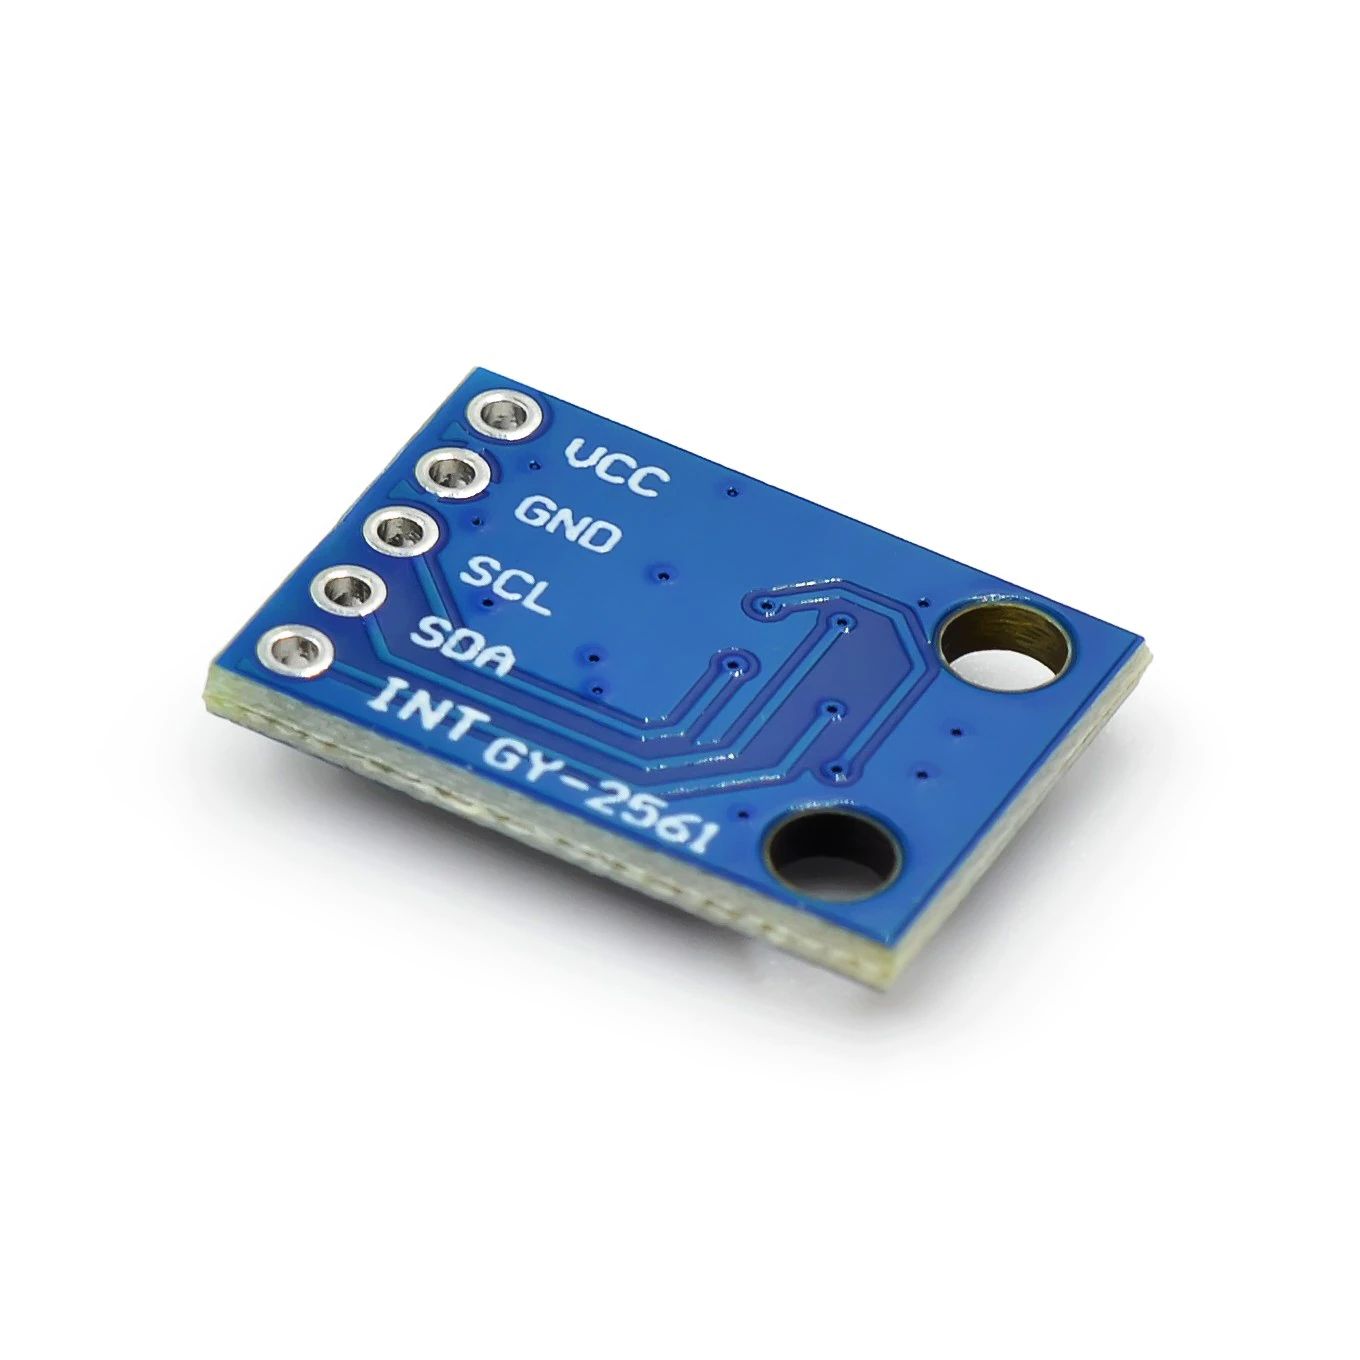 Lichtintensiteit sensor module I2C TSL2561 04